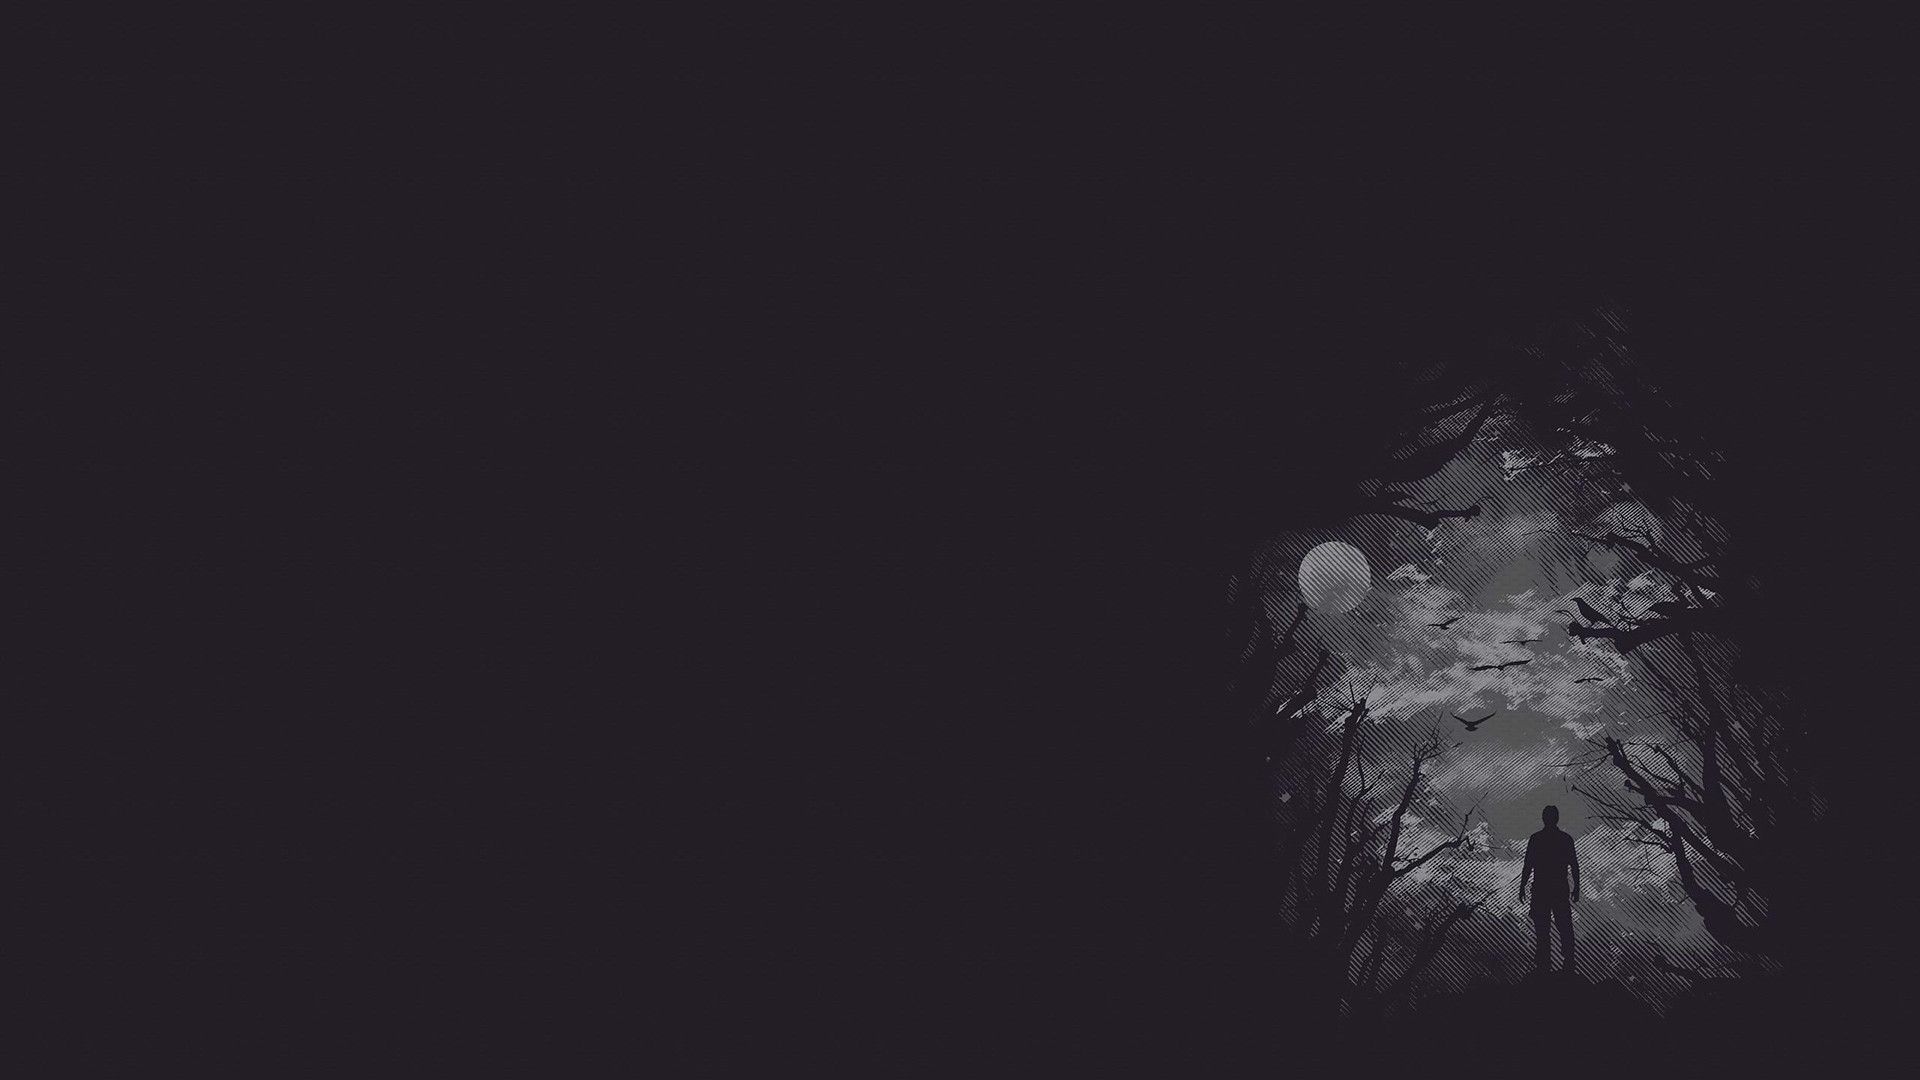 A man walking through a dark forest with bats flying around him - Creepy